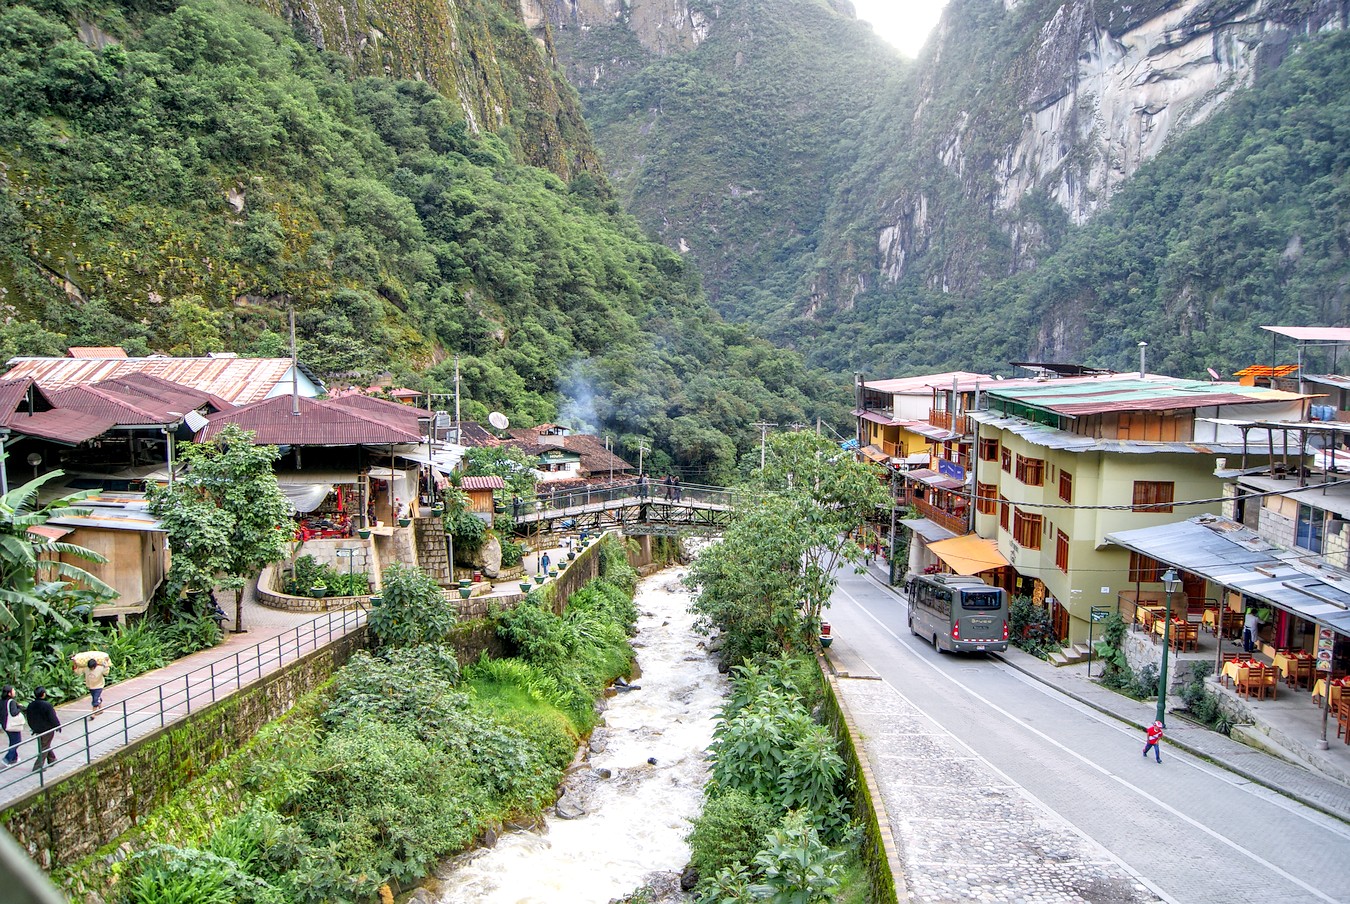 How To Get To Machu Picchu